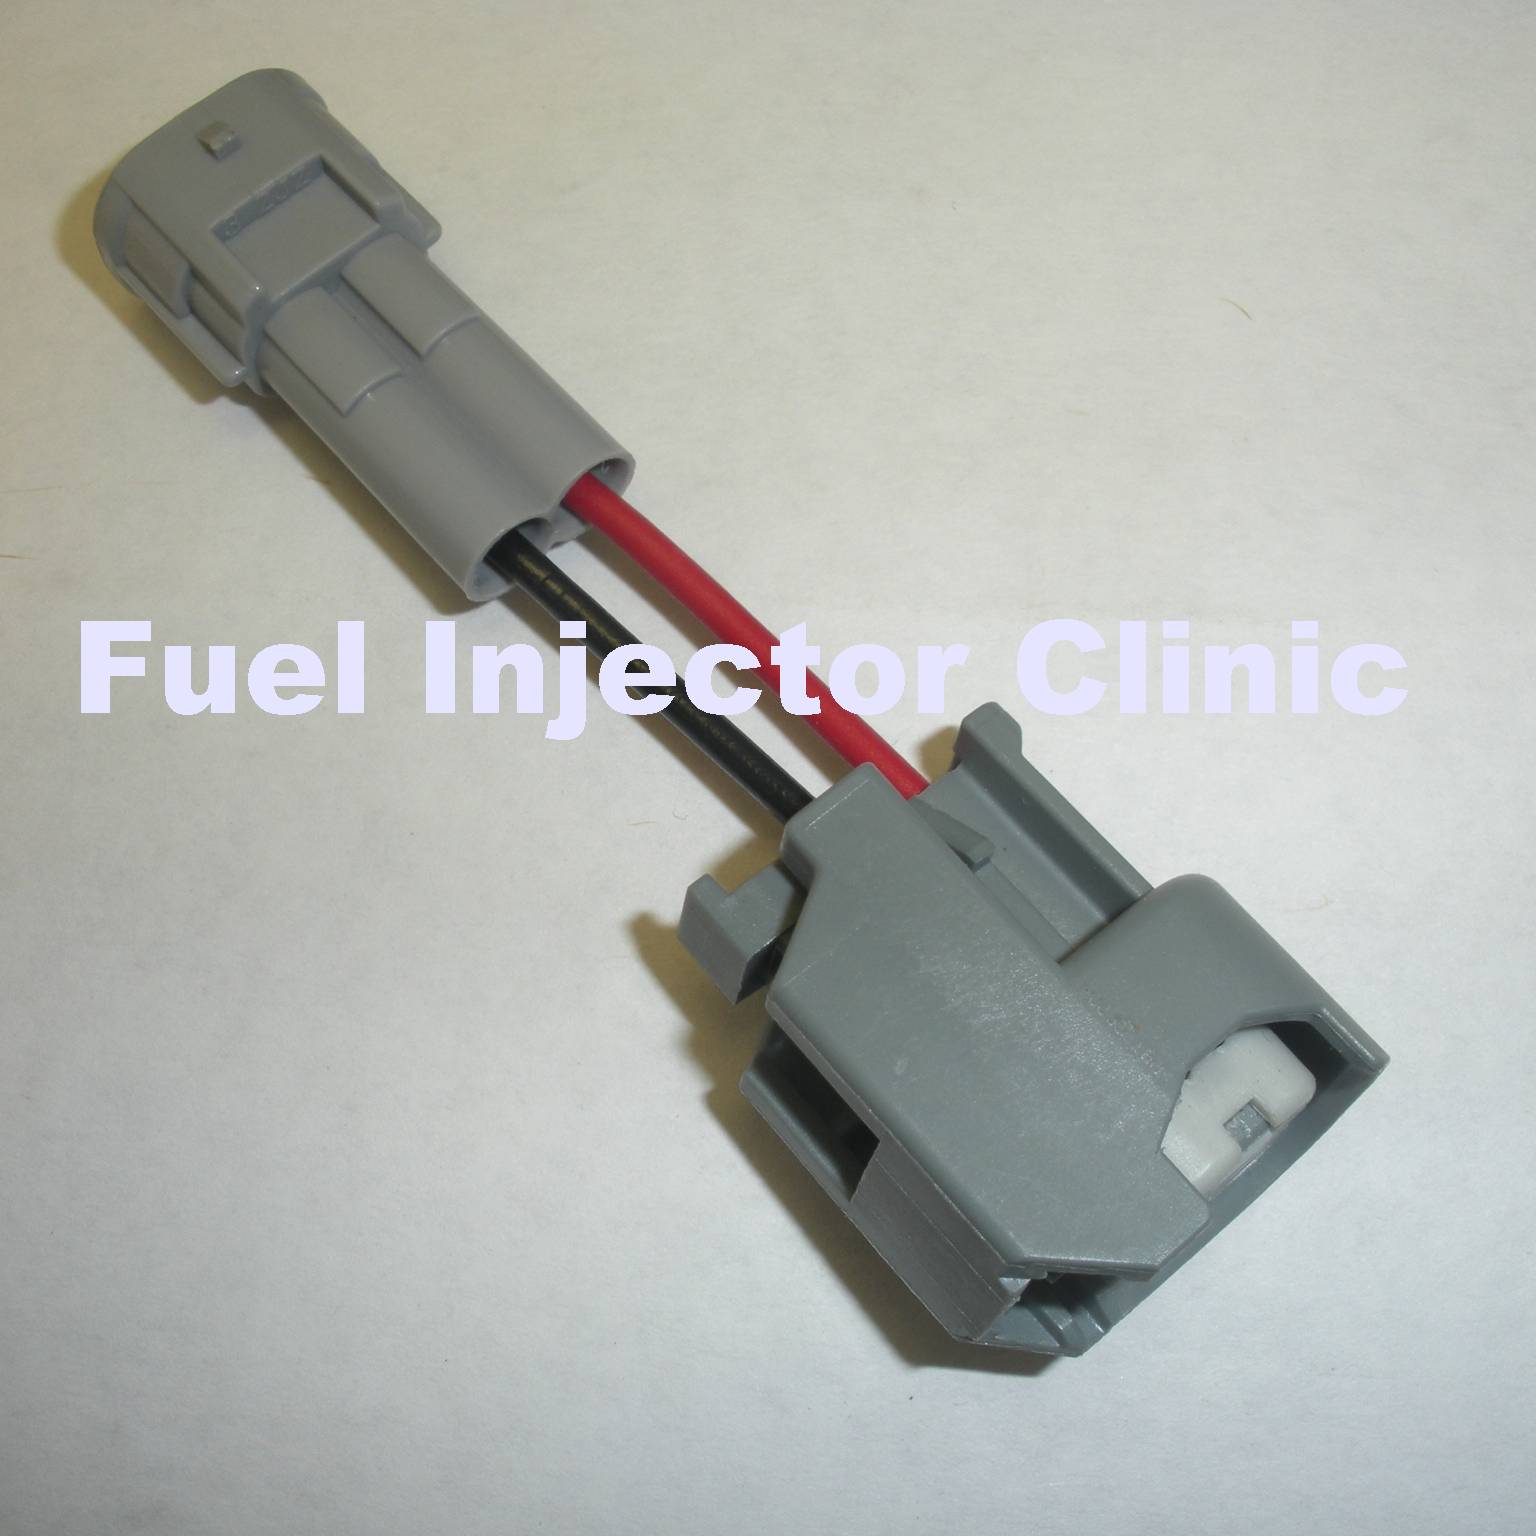 Fuel Injector Clinic Jetronic/EV1 to Honda plug adaptors